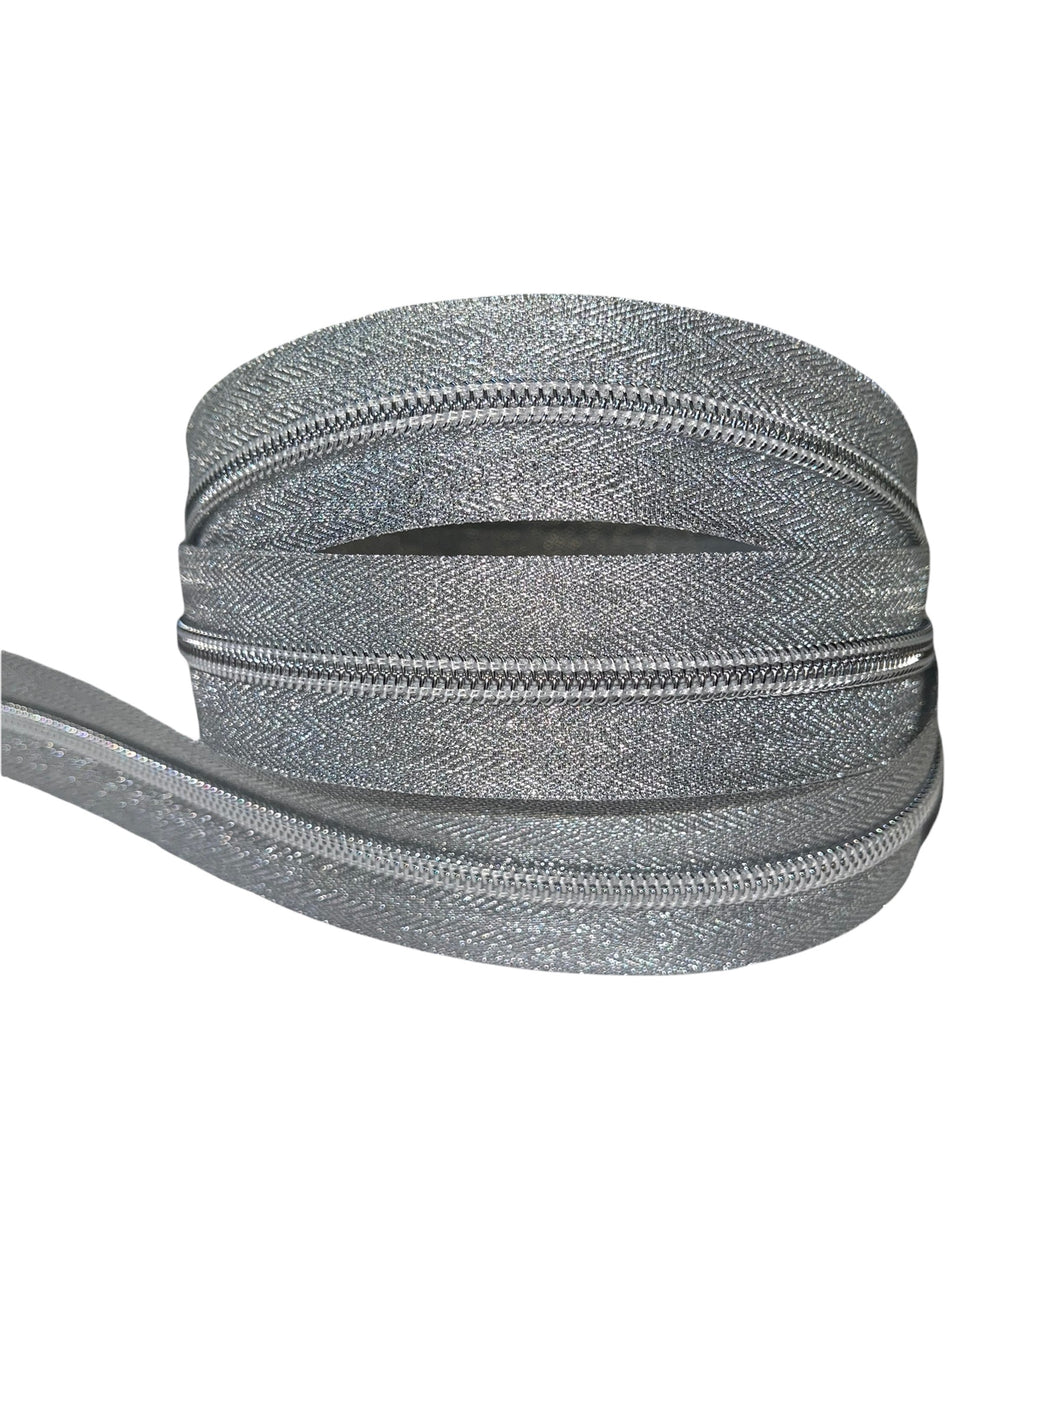 #5 Metallic Nylon Zipper Tape - Silver - by the yard